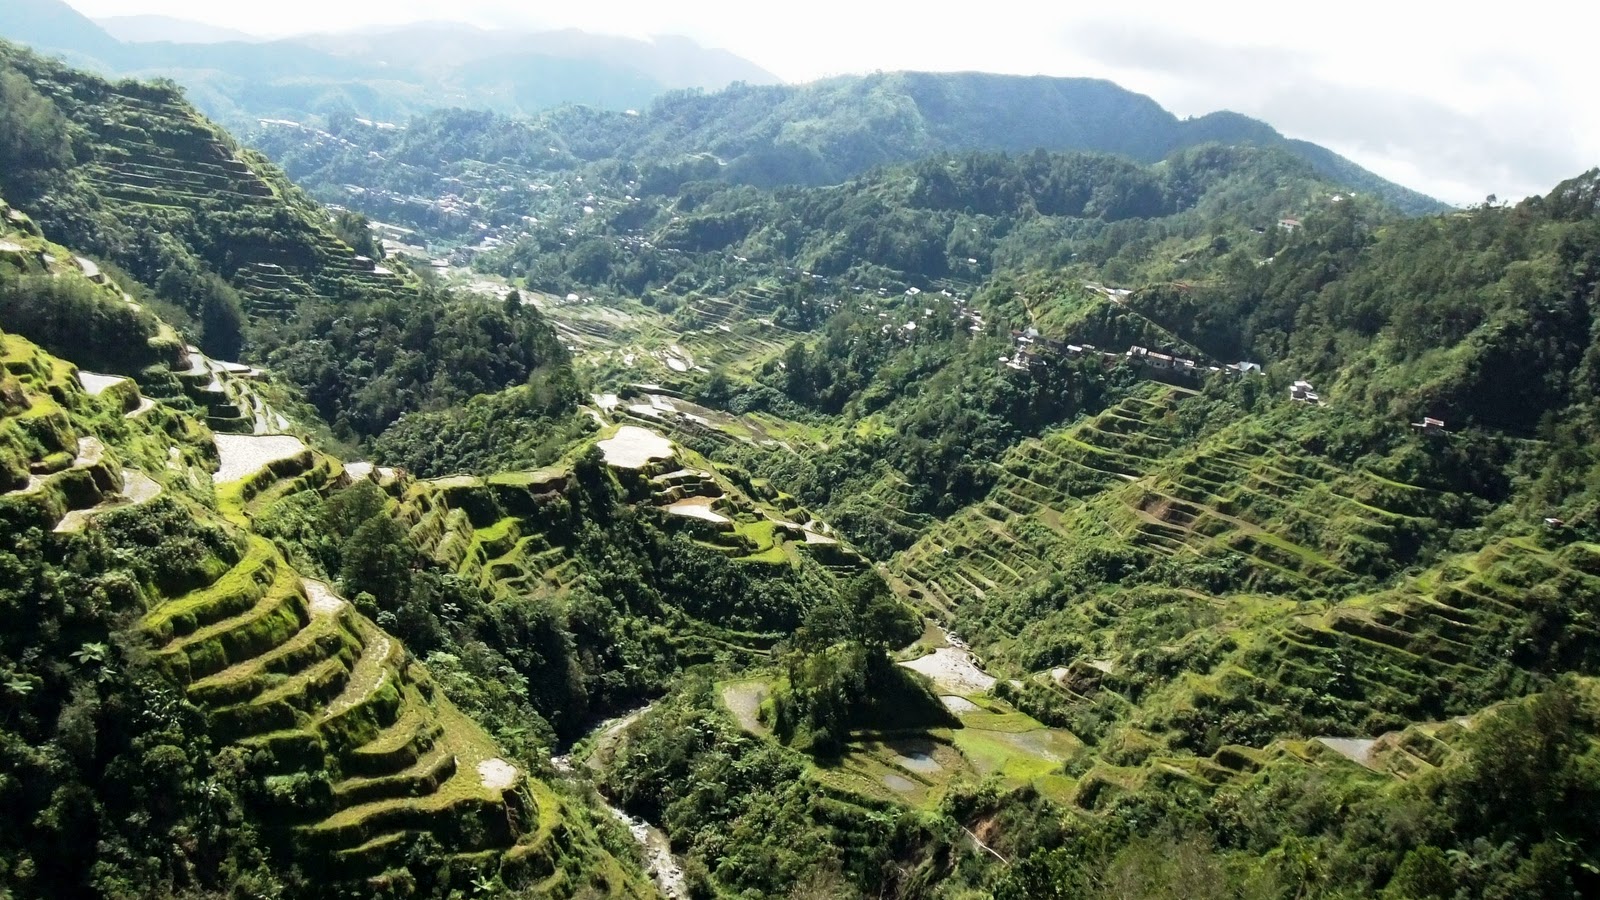 How far can Bubbles go?: Revisiting the Spectacular Banaue Rice Terraces